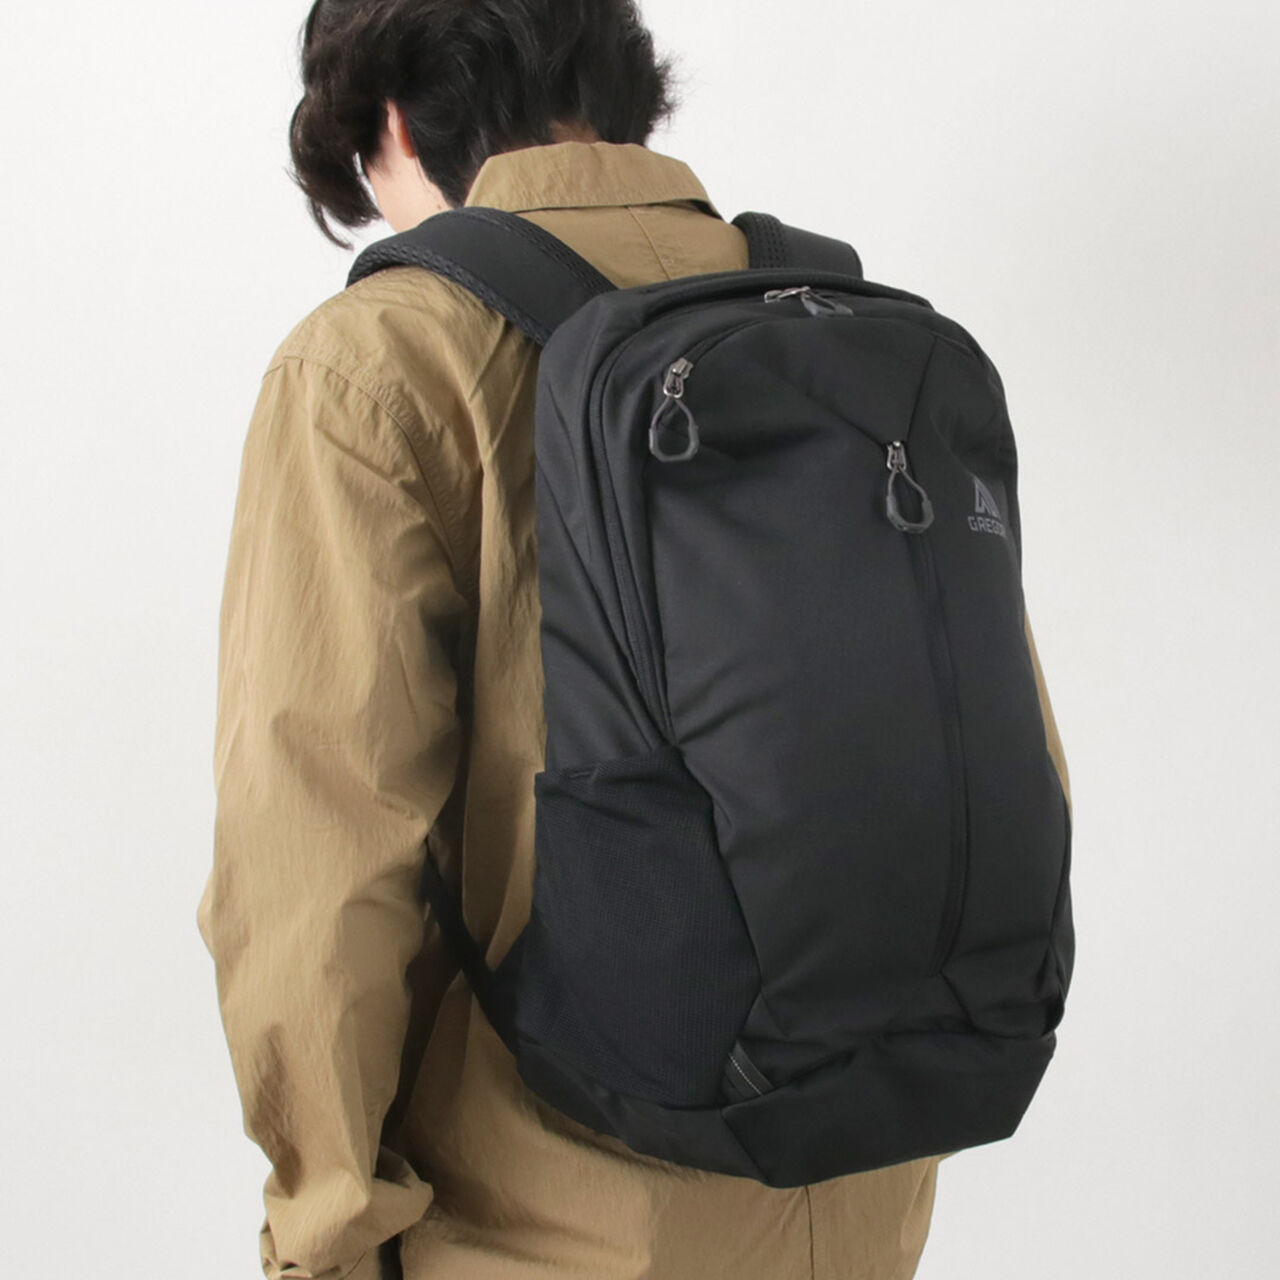 RHUNE 20 backpack,, large image number 11